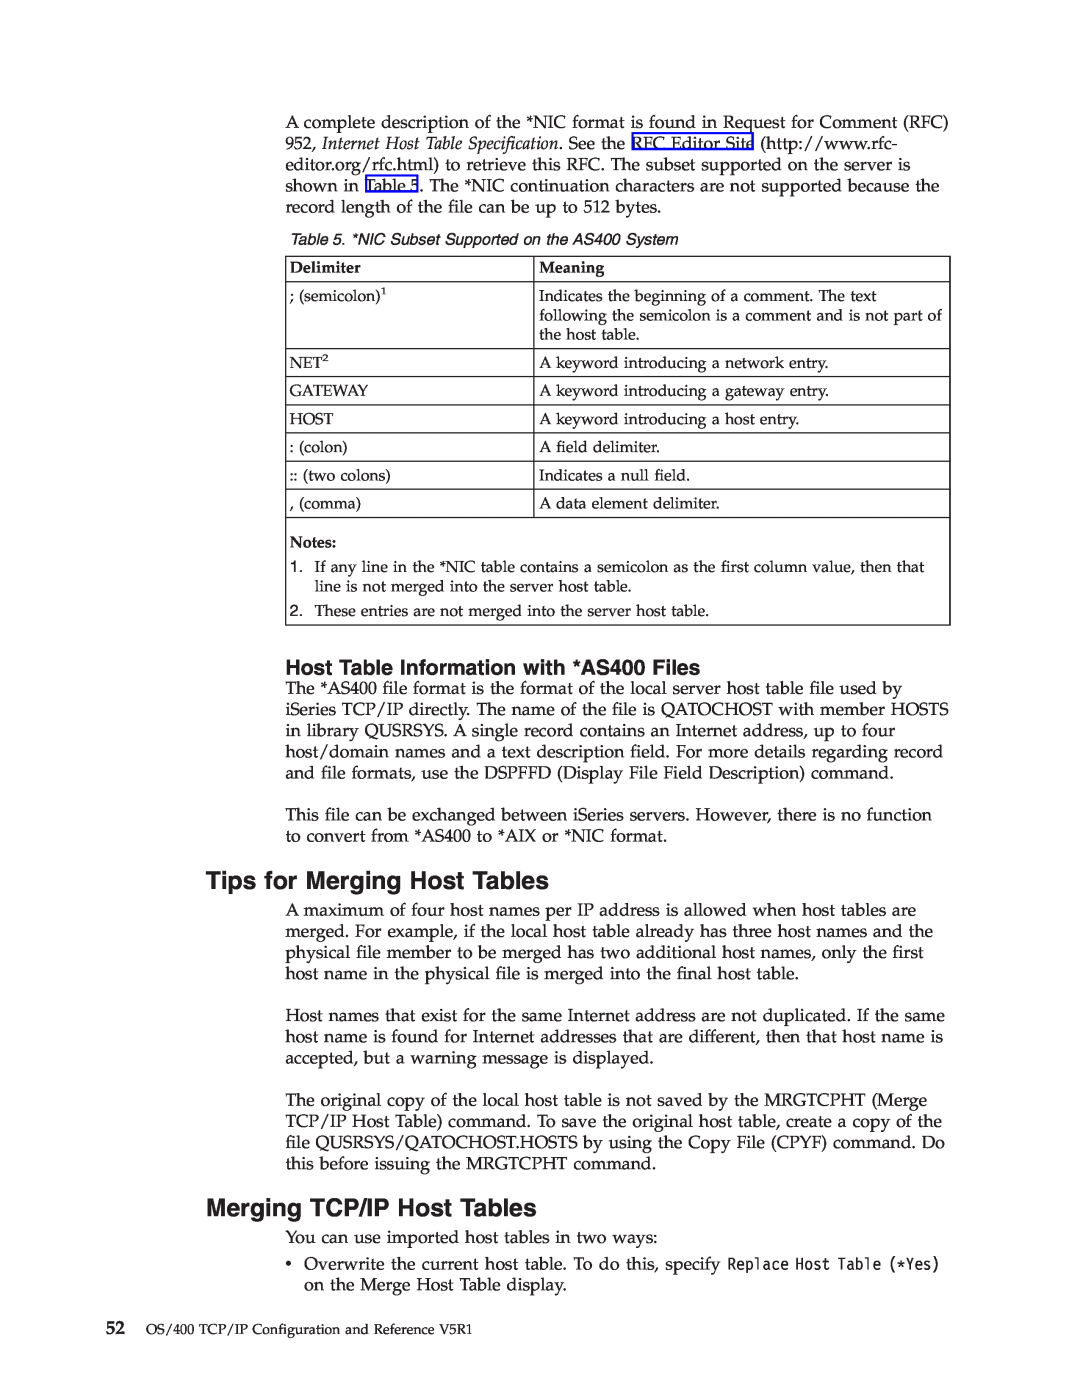 IBM SC41-5420-04 manual Tips for Merging Host Tables, Merging TCP/IP Host Tables, Host Table Information with *AS400 Files 